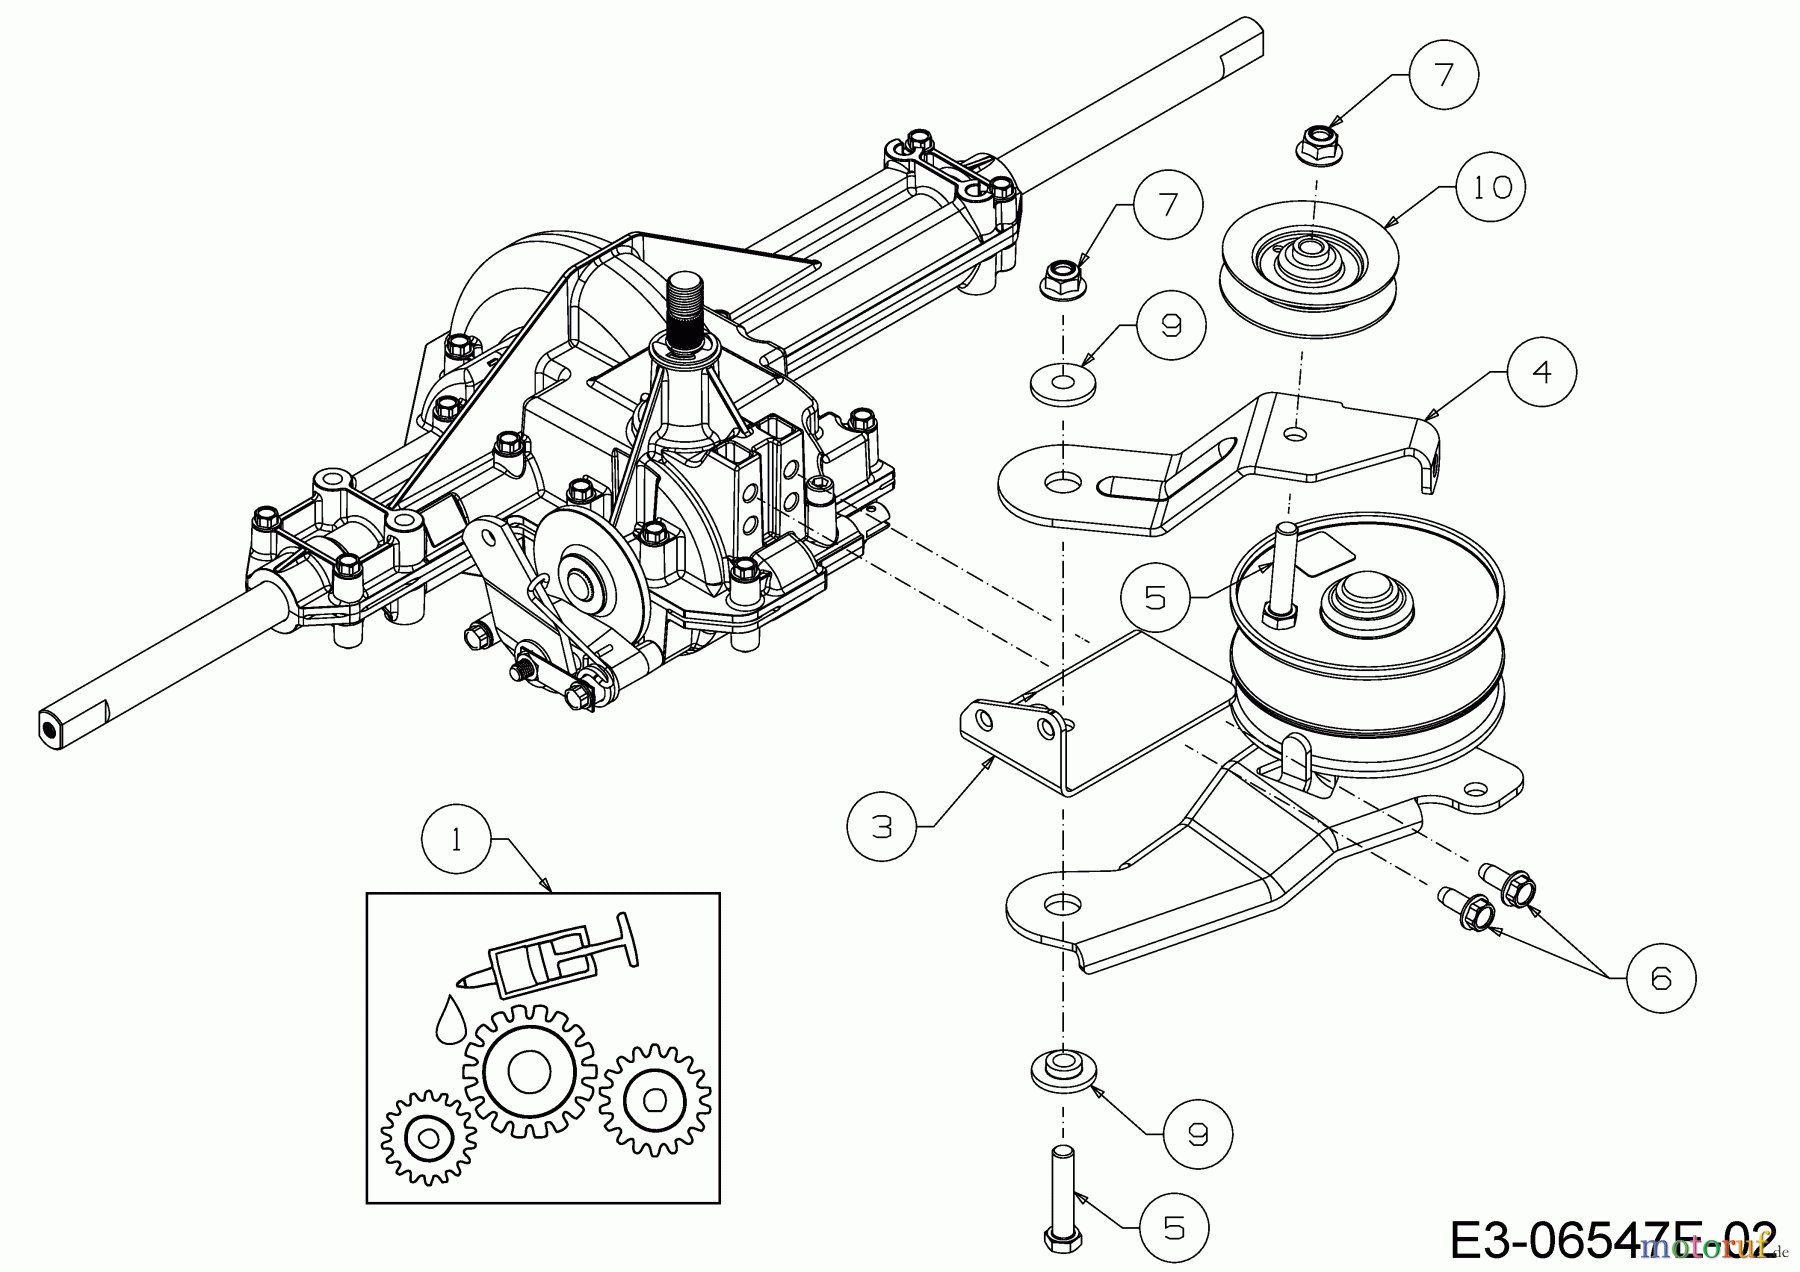  MTD Lawn tractors Smart RF 125 13HH76KF600  (2018) Idle pullie gearbox